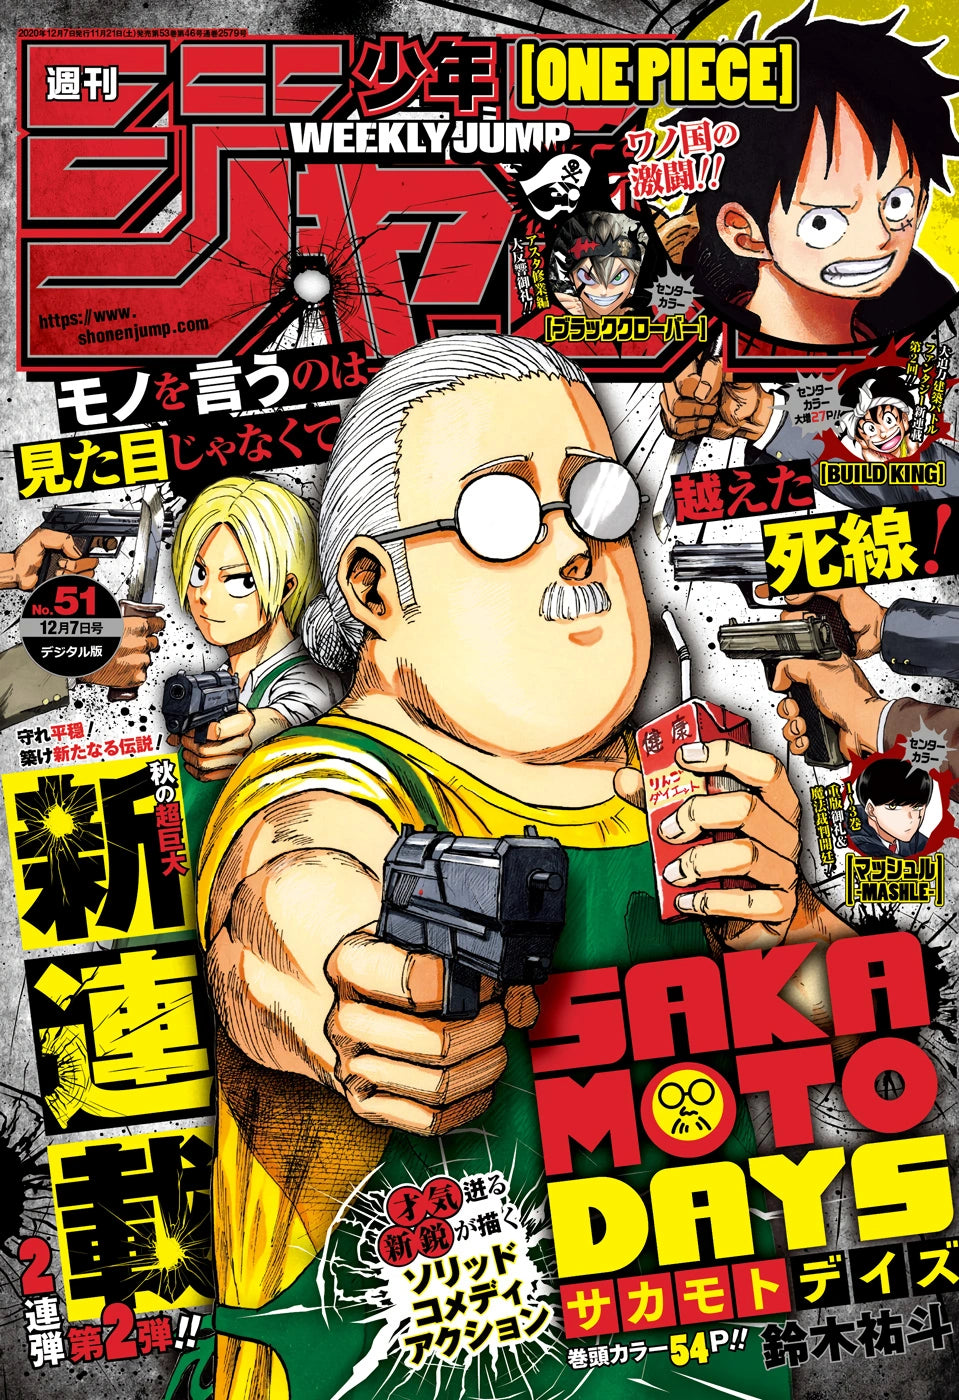 Weekly Shonen Jump #51, 2020